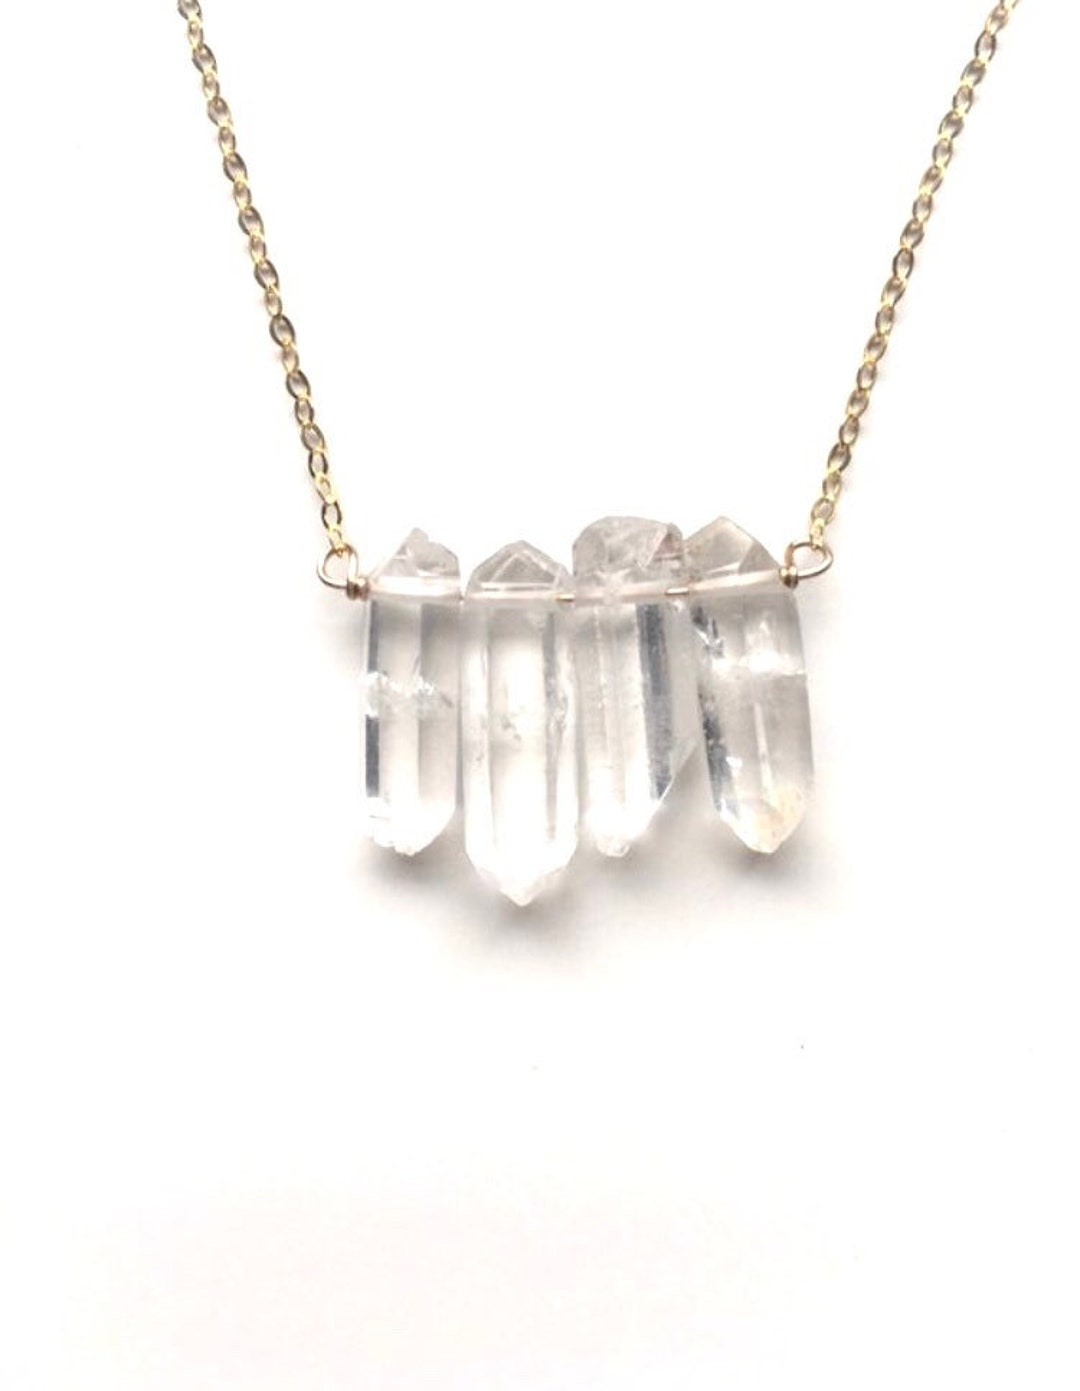  Genuine Raw Cut Clear Quartz Necklace Crystal Necklace